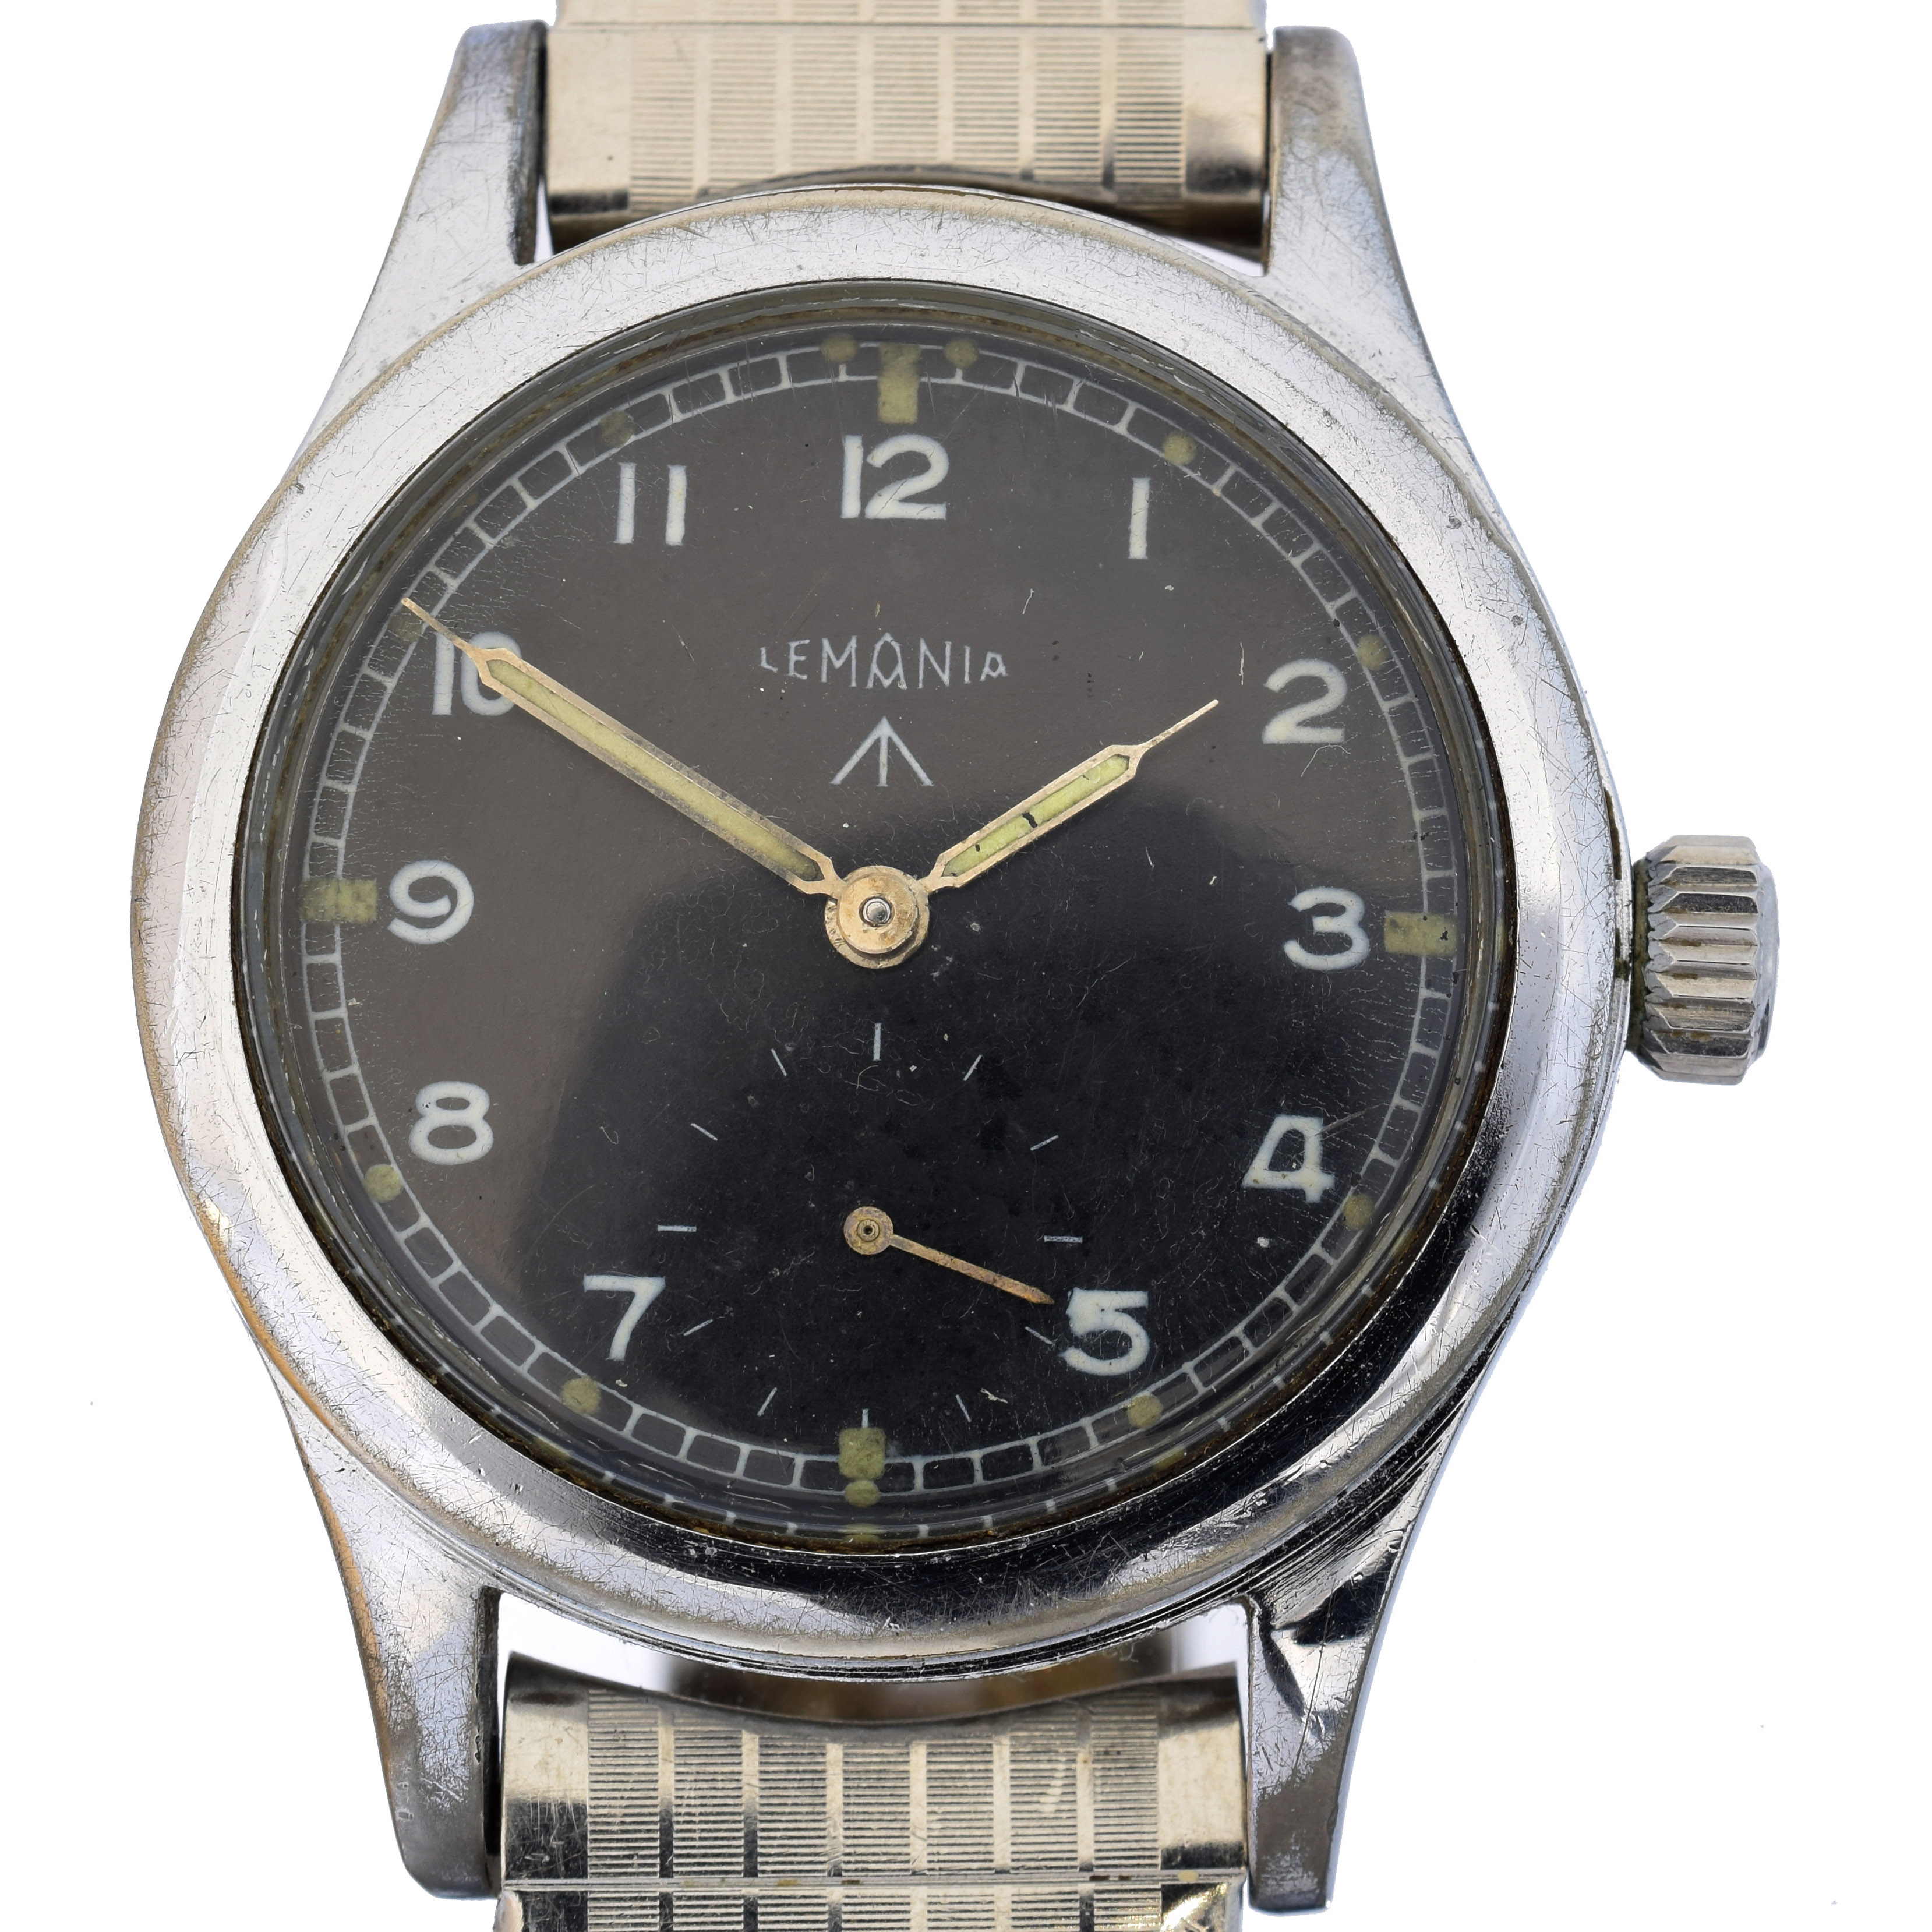 A Lemania Dirty Dozen wristwatch